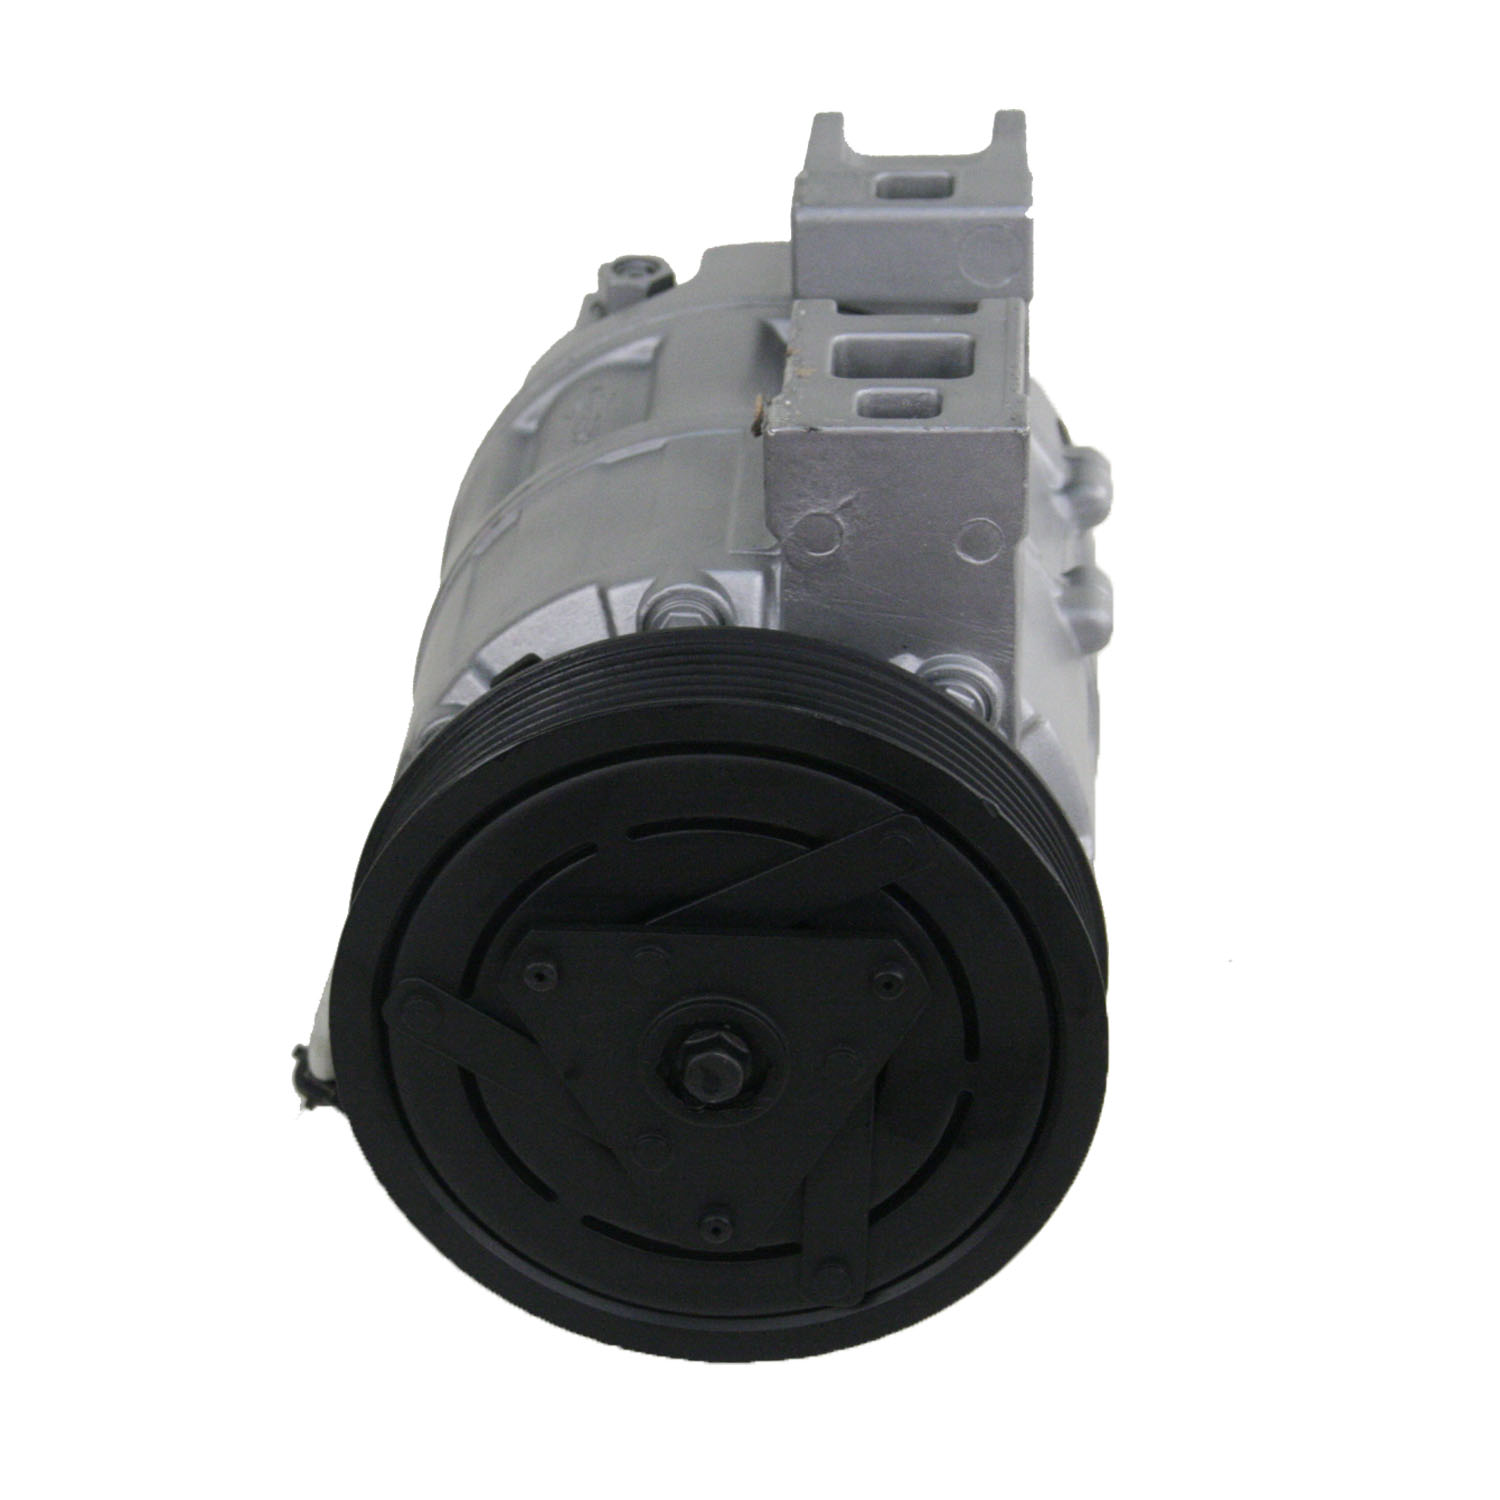 TCW Compressor 12570.6T1 Remanufactured Product Image field_60b6a13a6e67c